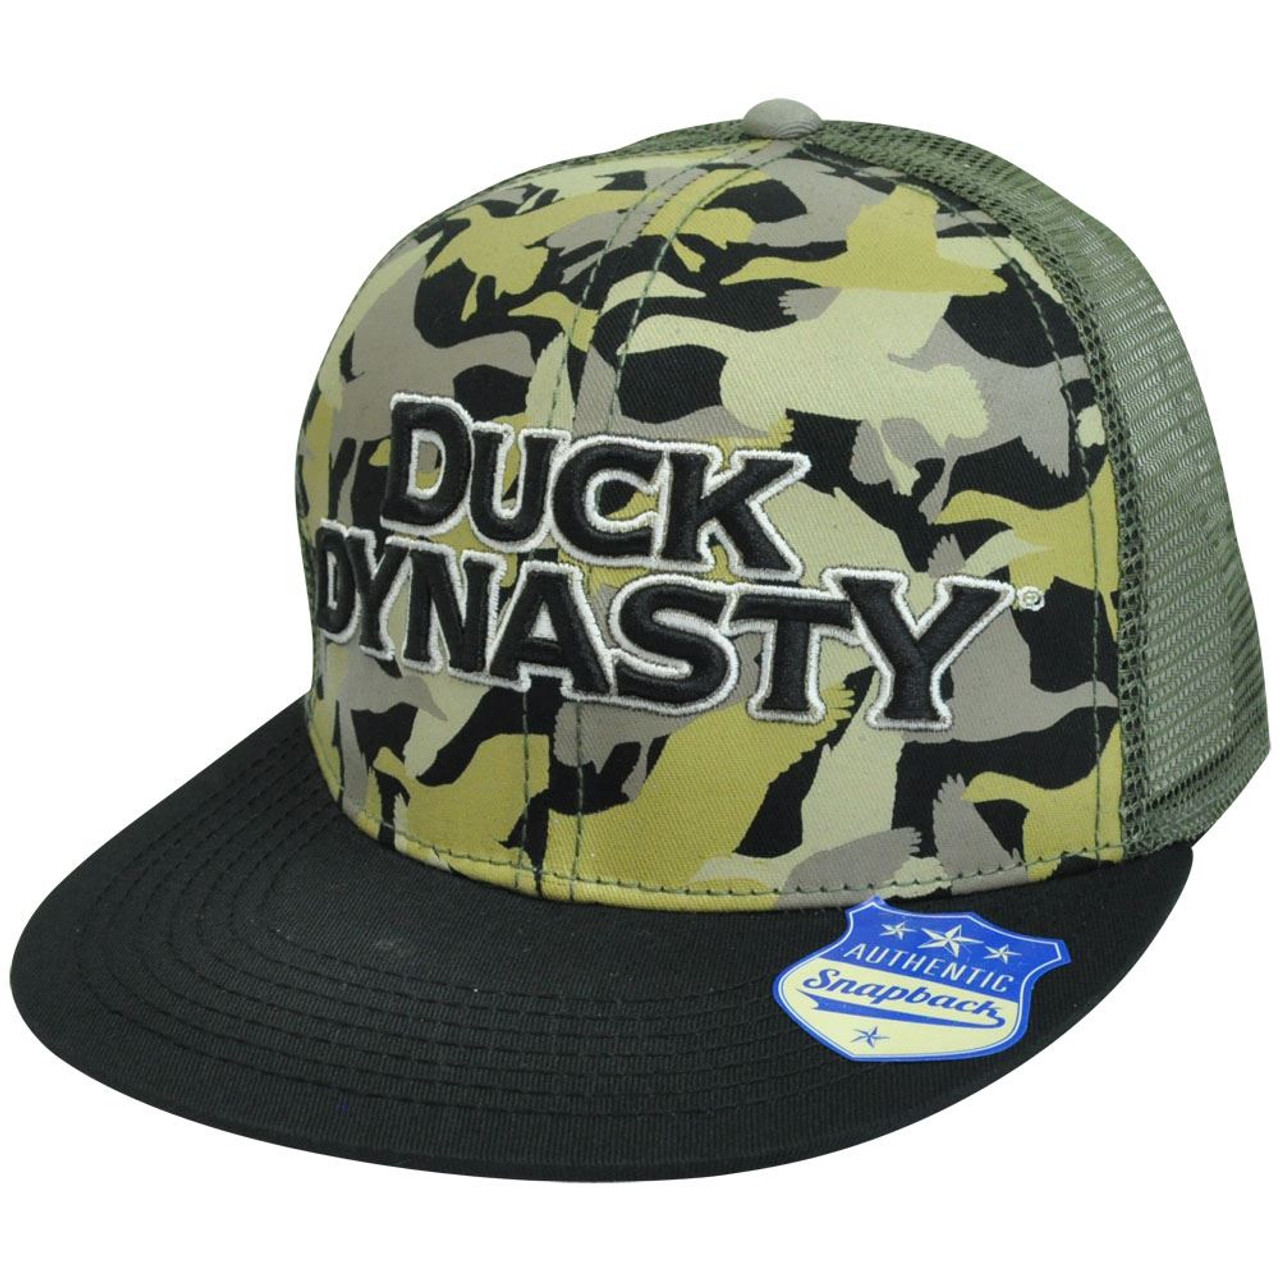 Minnaar Klem Gom A&E TV Series Duck Dynasty Flat Bill Mesh Trucker Snapback Camouflage Hat  Cap - Cap Store Online.com